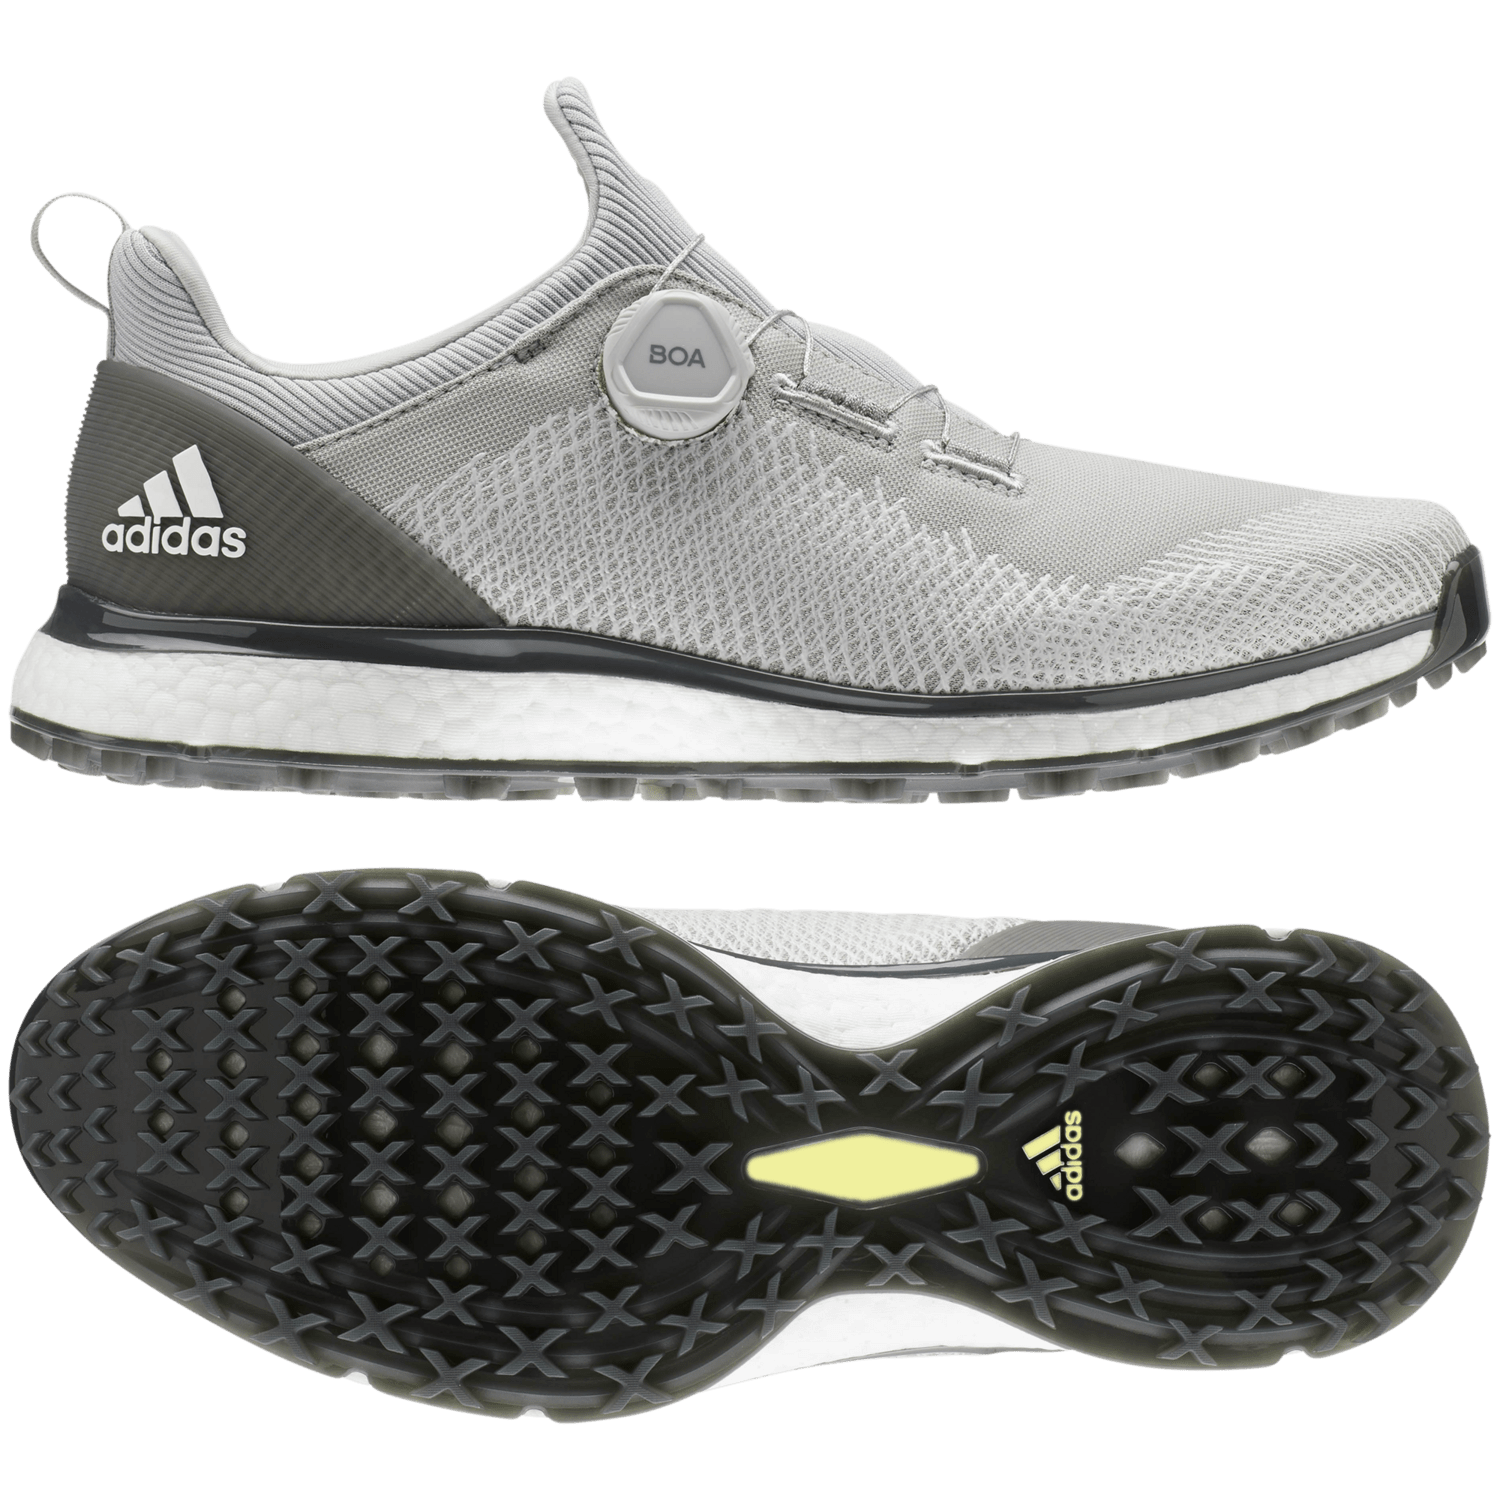 adidas golf forgefiber boa shoes